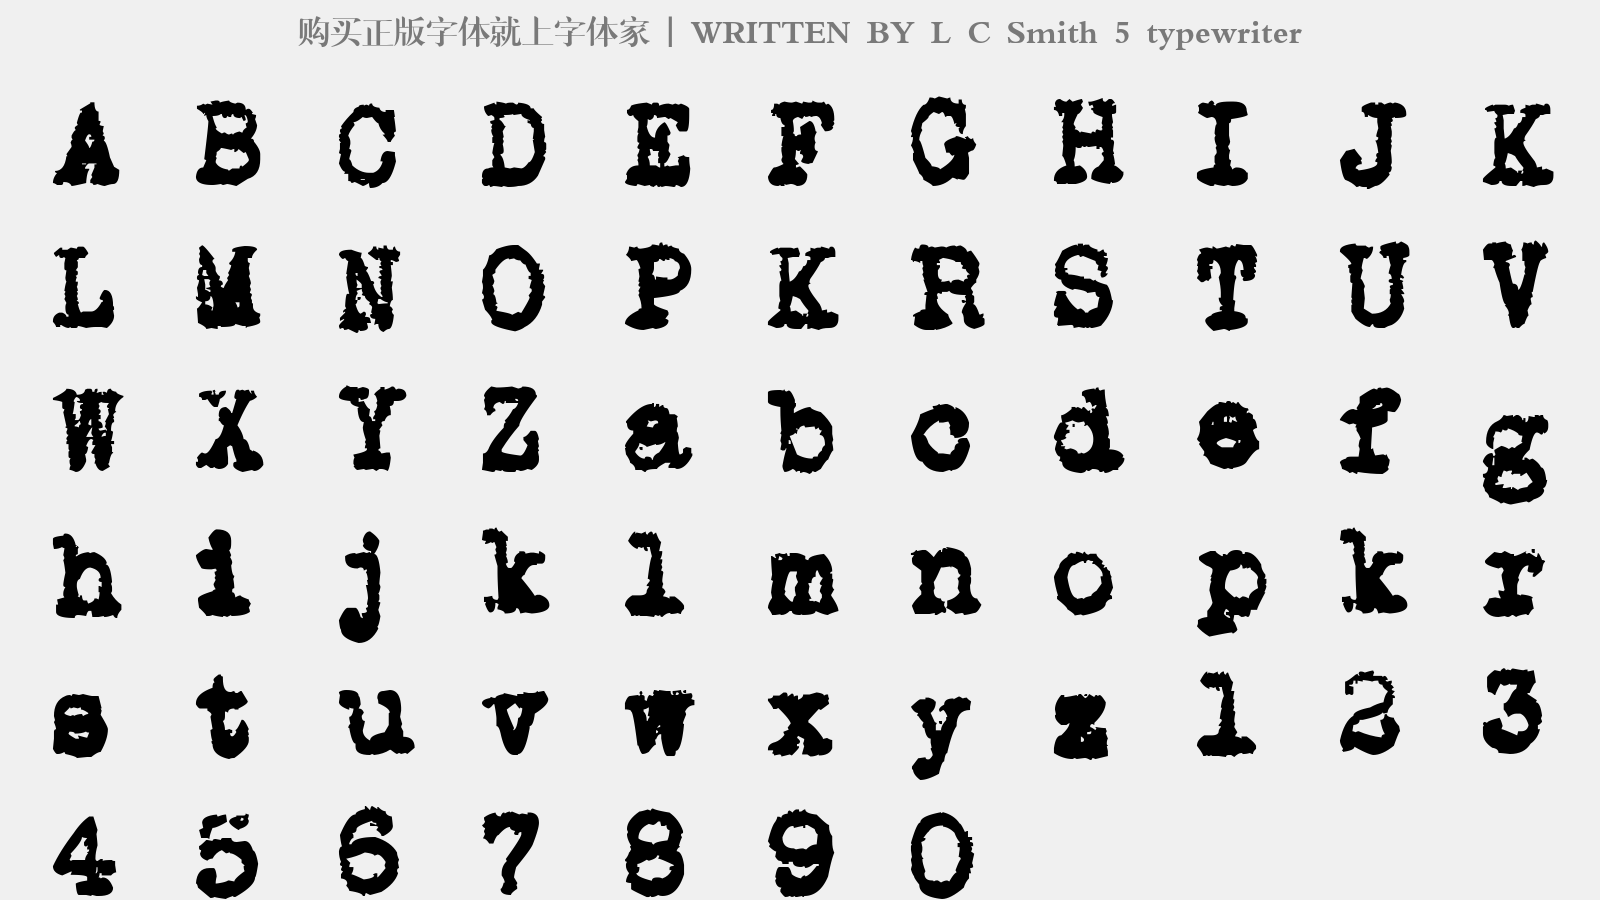 L C Smith 5 typewriter - 大写字母/小写字母/数字